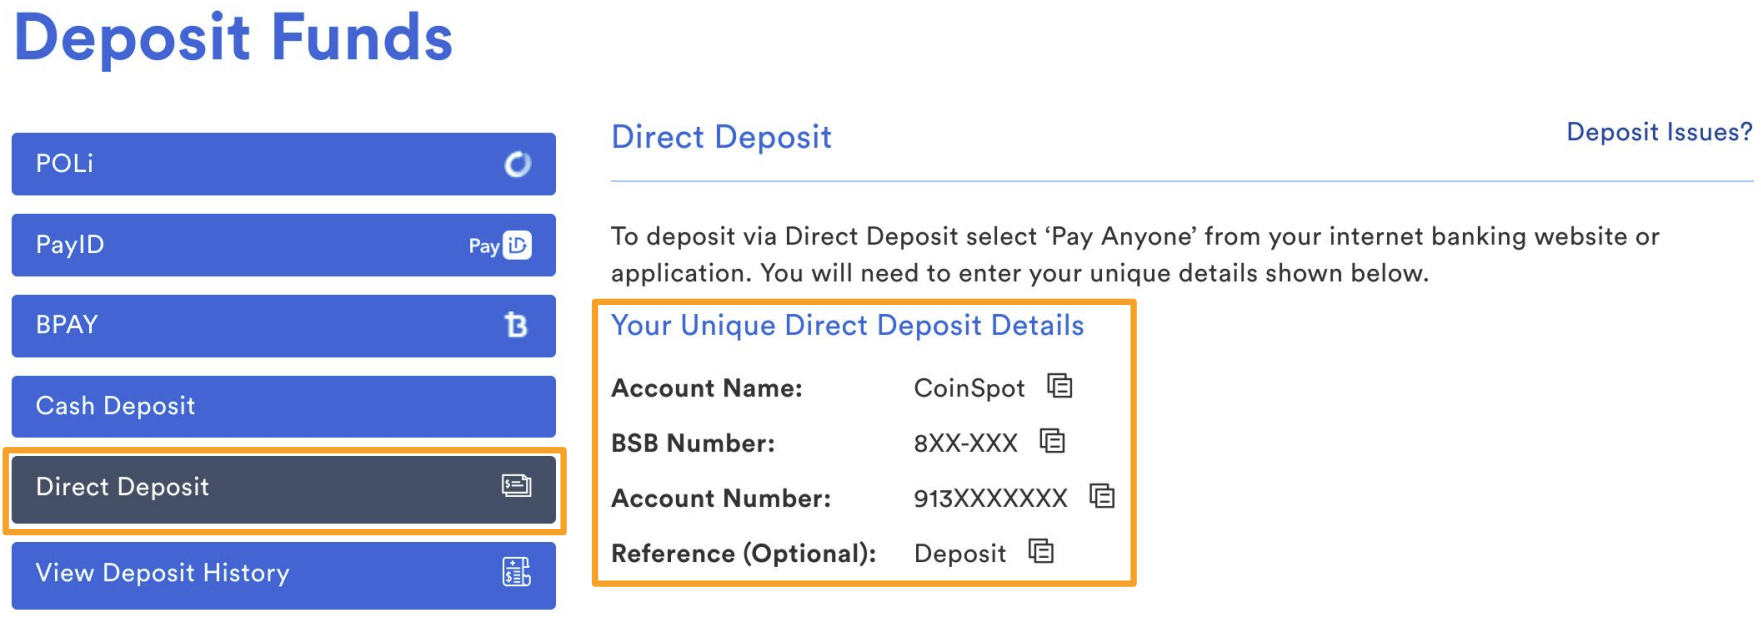 CoinSpot_Example_Direct_Deposit_Details.png